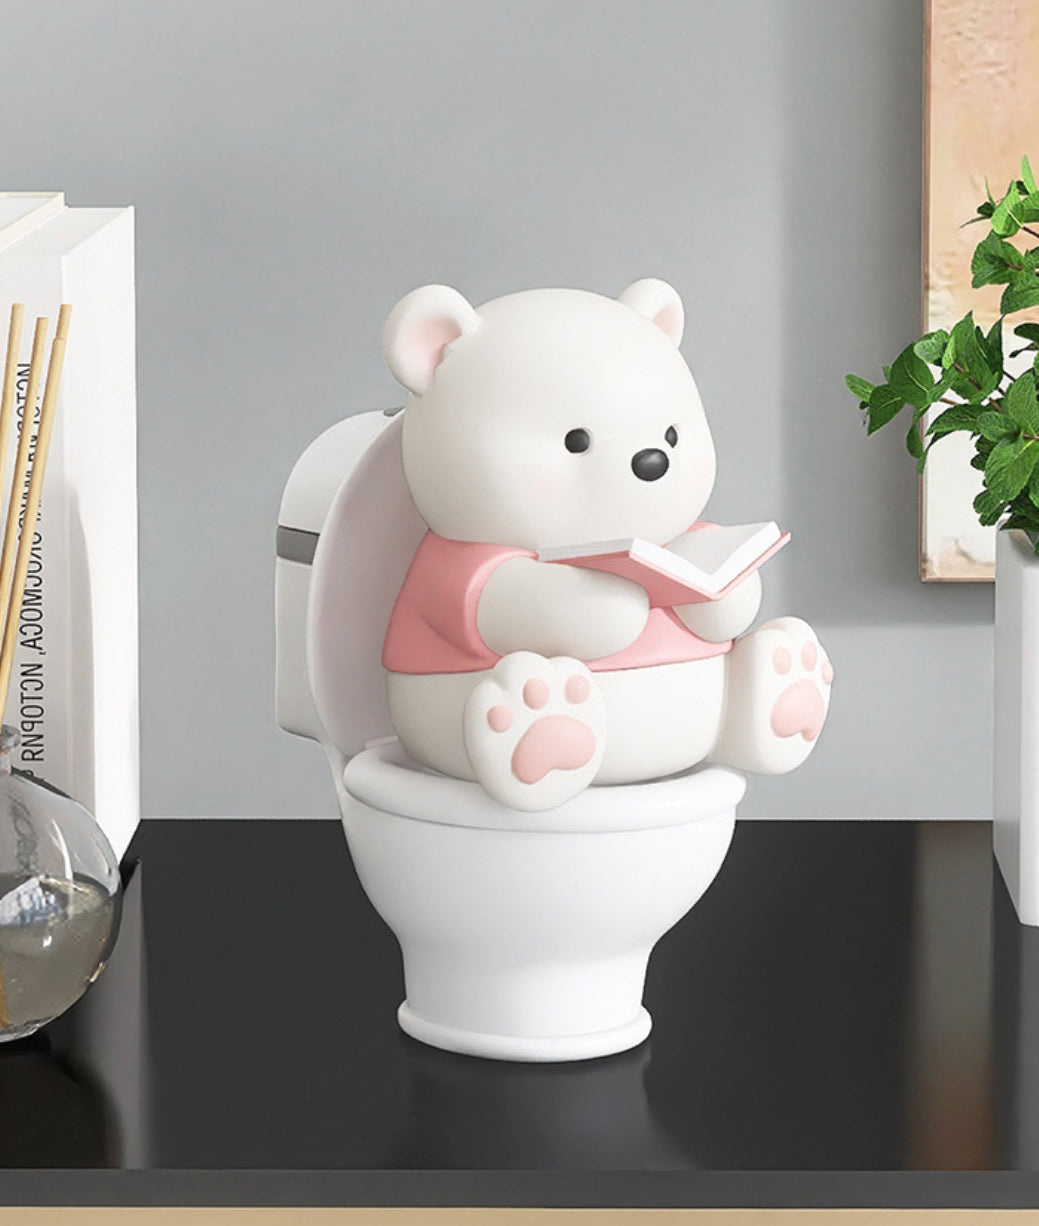 Teddy Bear Figurine on a Toilet with Book / Decorative Show Piece